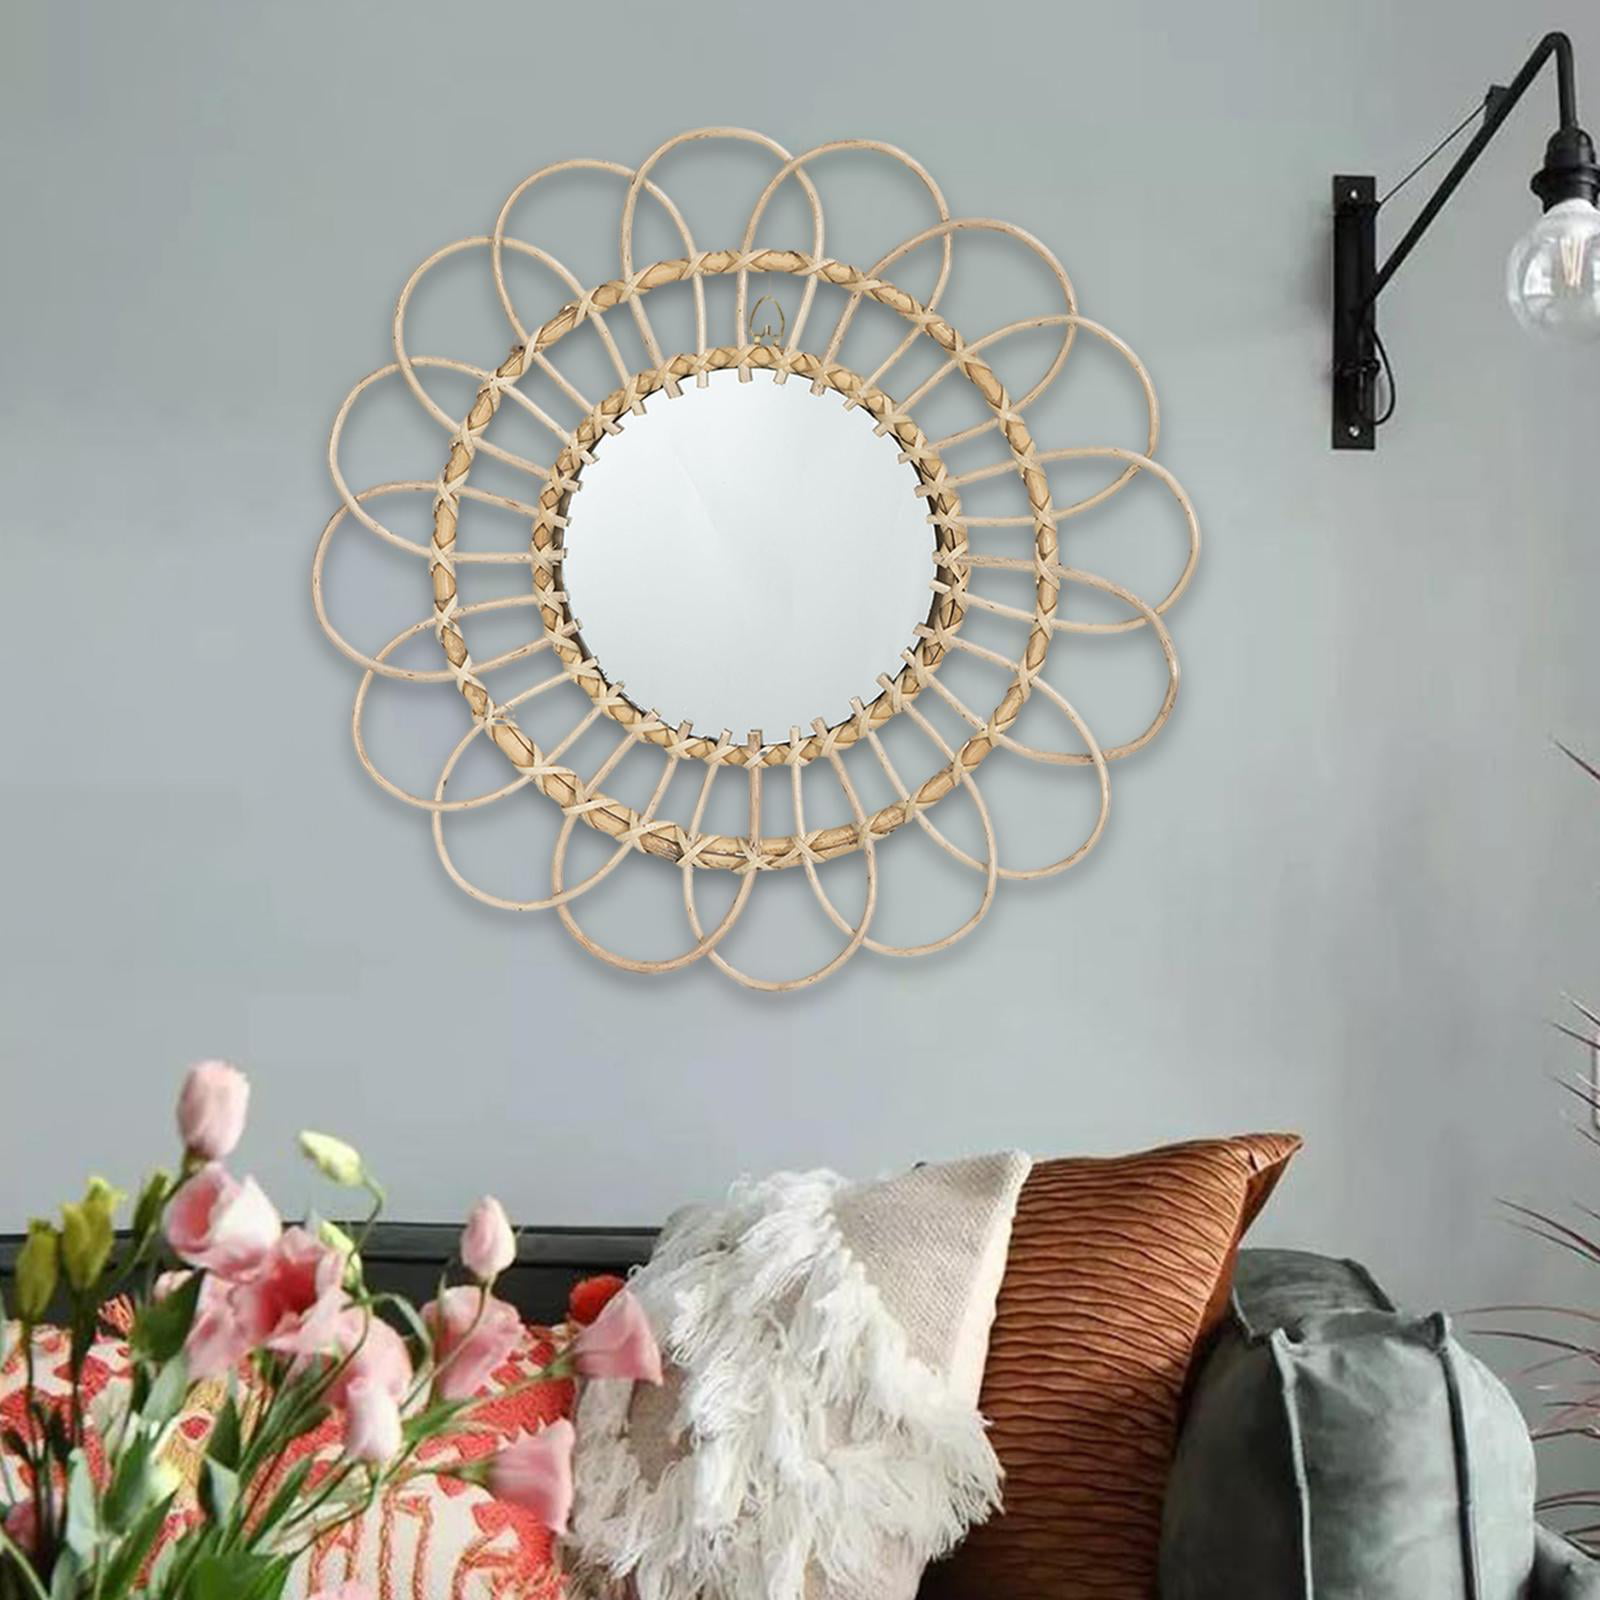 Decorative Round Mirror, Mirror Work, for Living Room, for Bathroom, Wall  Decor Item, Handmade Artwork, Gifting Item, Hand-painted Artwork 